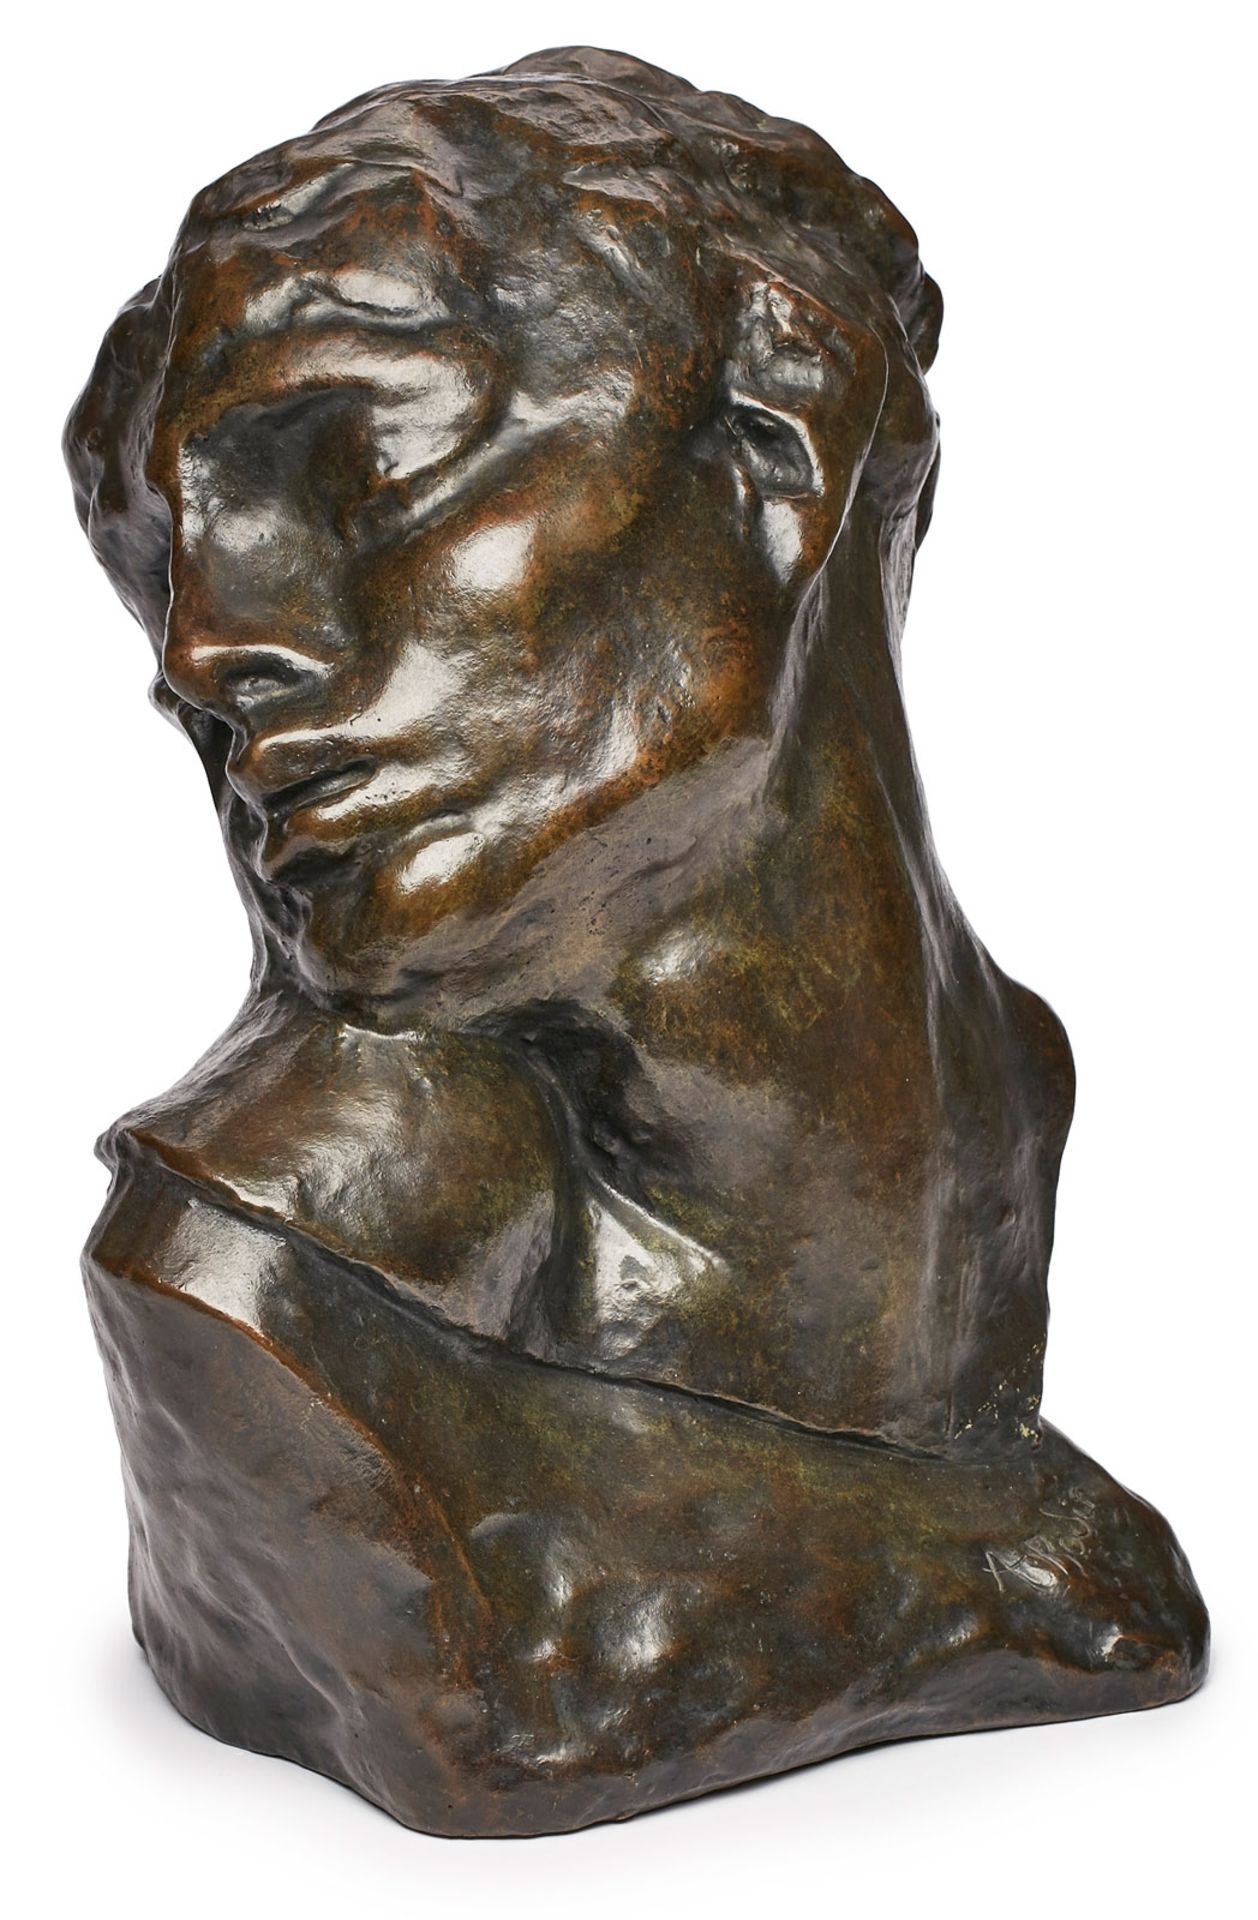 Gr. Bronze wohl nach Auguste Rodin: "Tête de la Luxure", 1. Hälfte 20. Jh. - Bild 6 aus 13